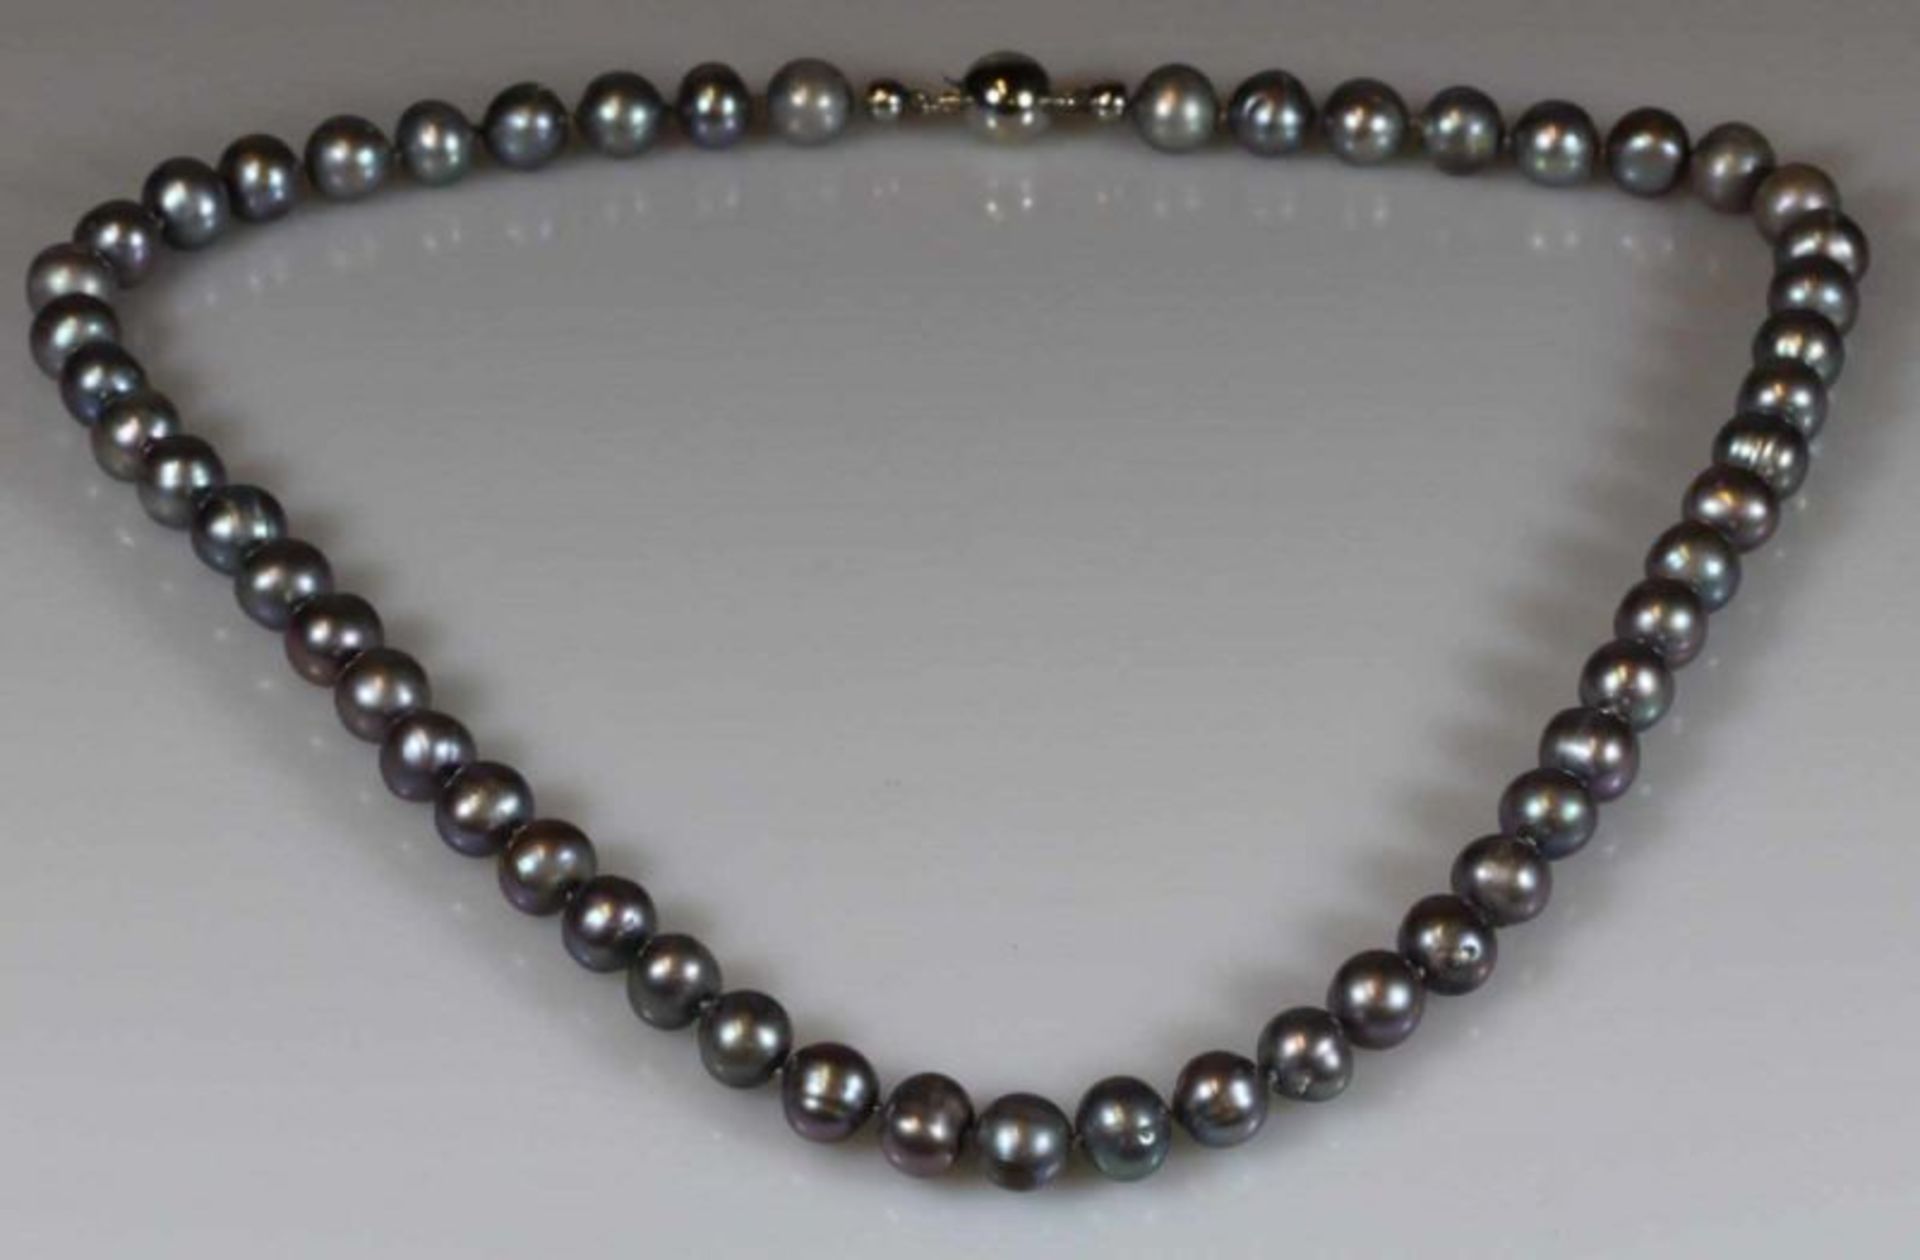 Perlenkette, 52 graue Zuchtperlen ø ca. 9.5 mm, Schließe WG 585, 47 cm lang 20.00 % buyer's